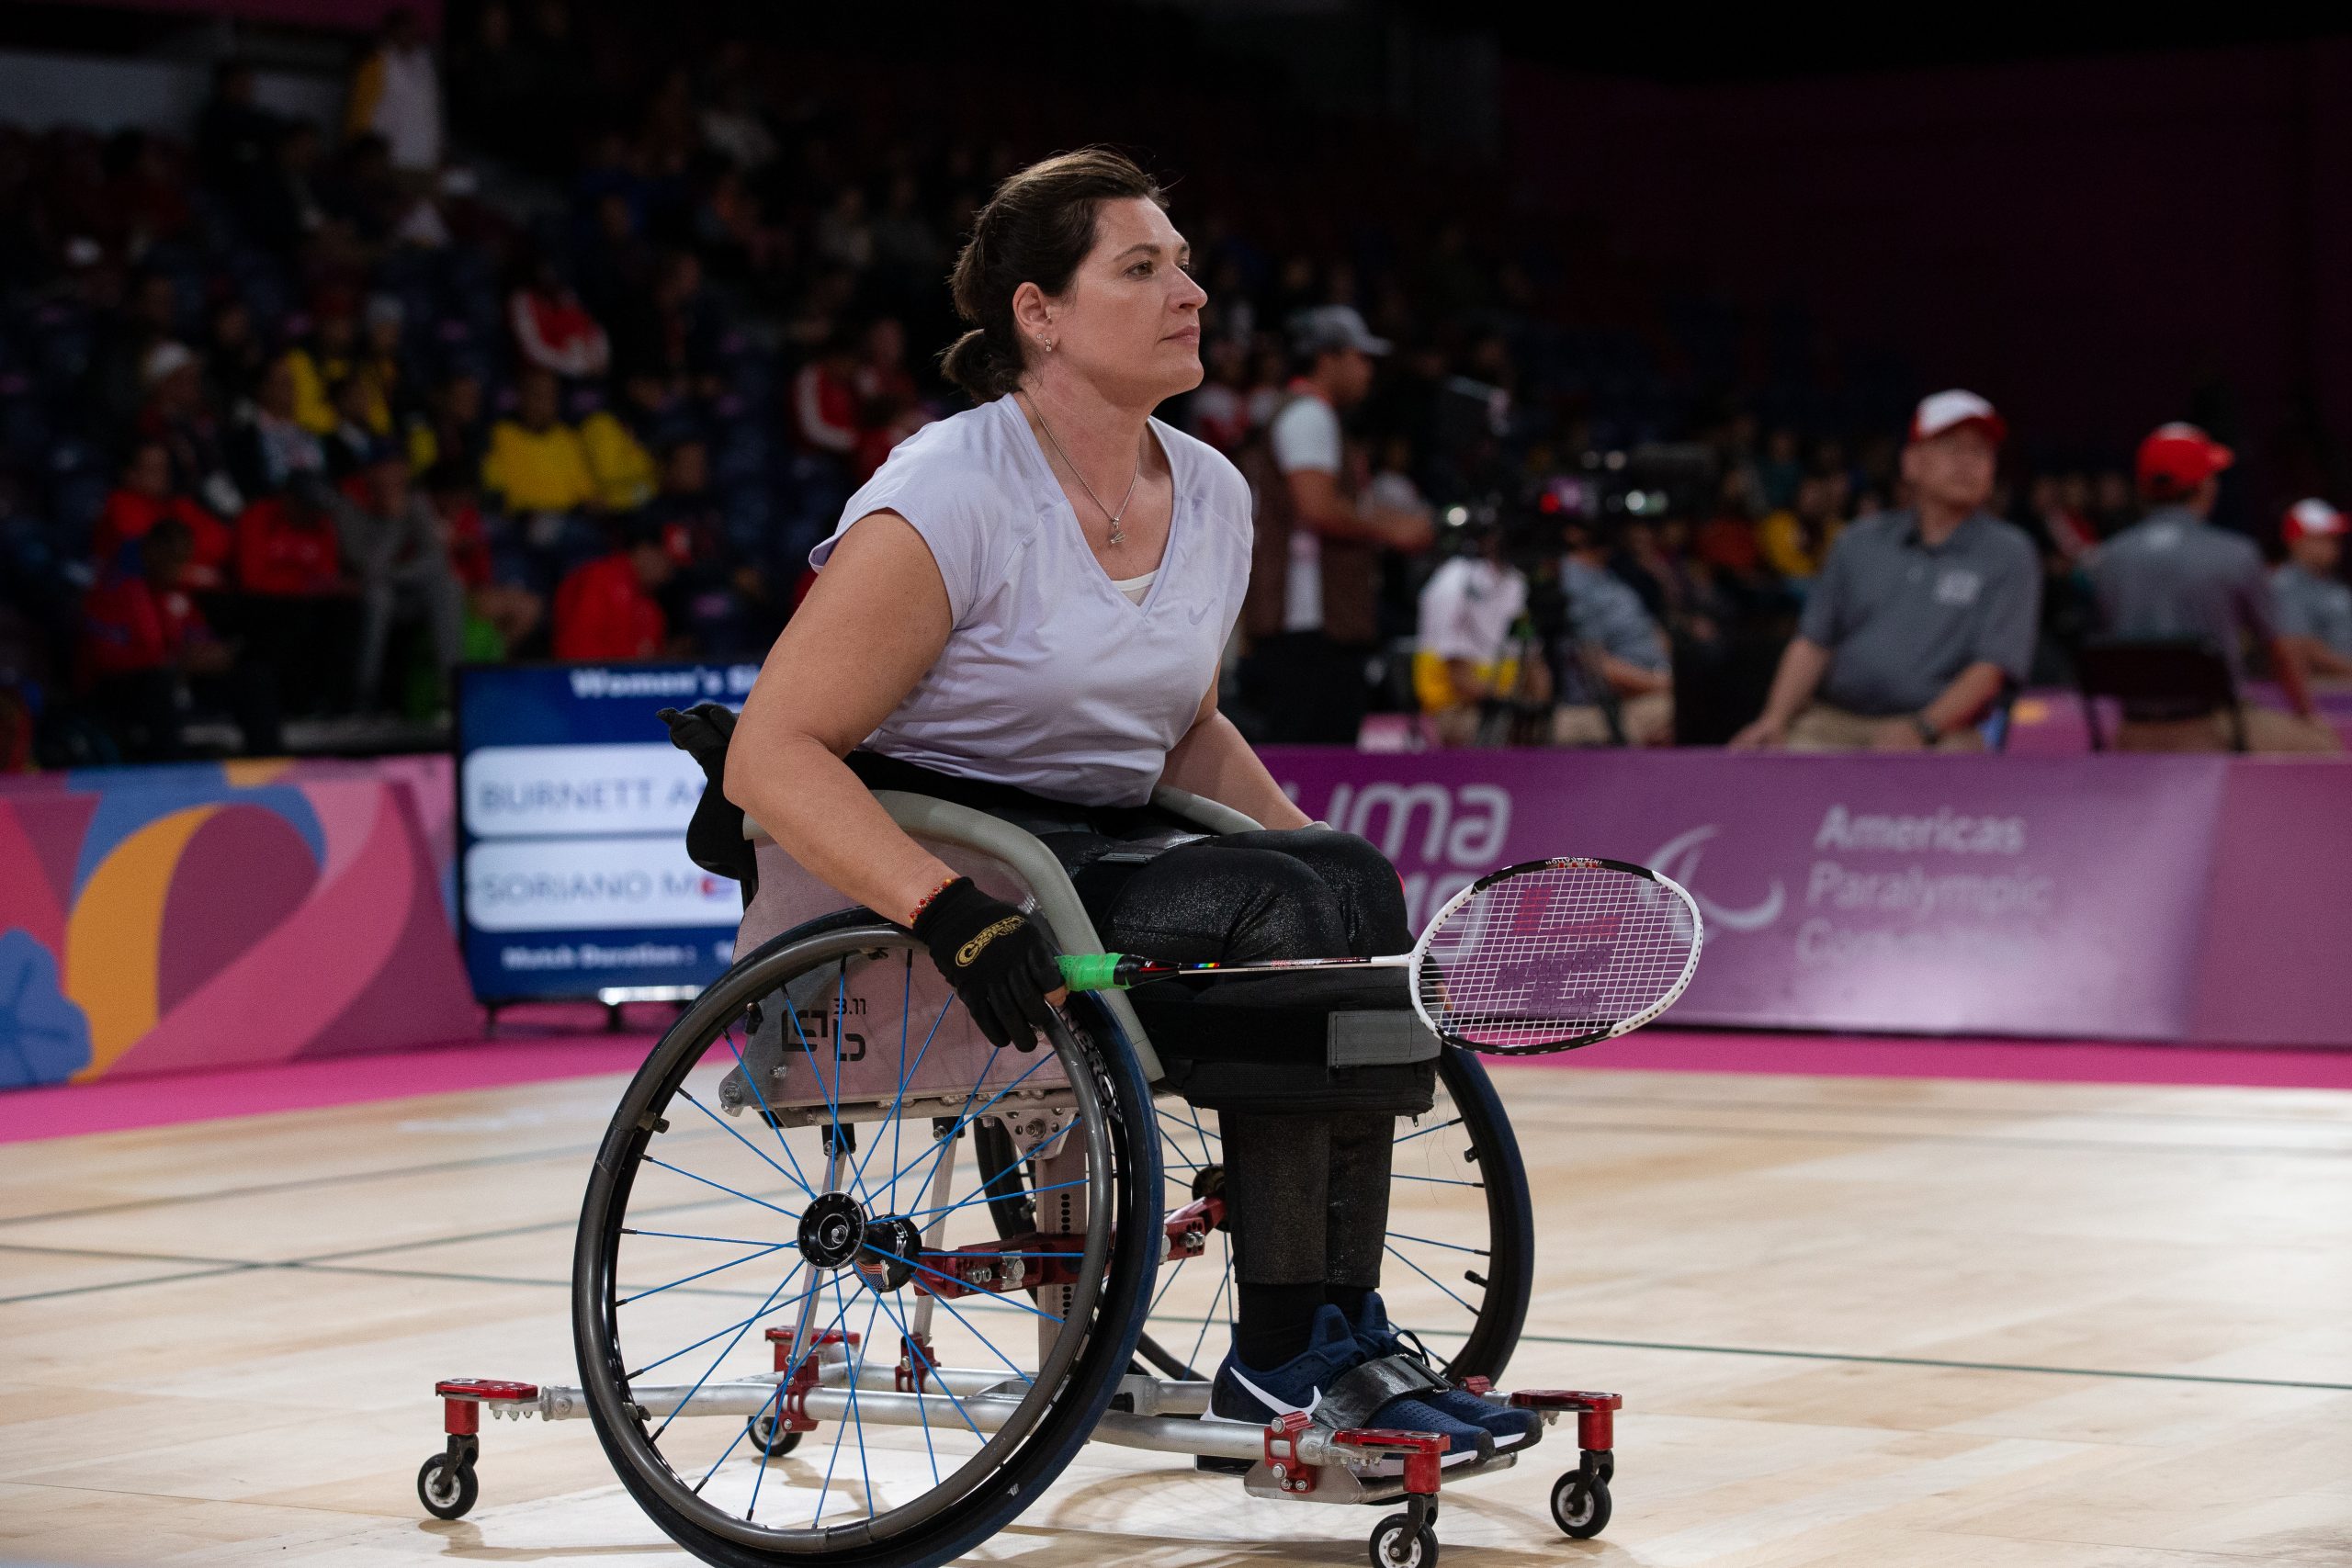 Female athlete in wheelchair holding a badminton racket